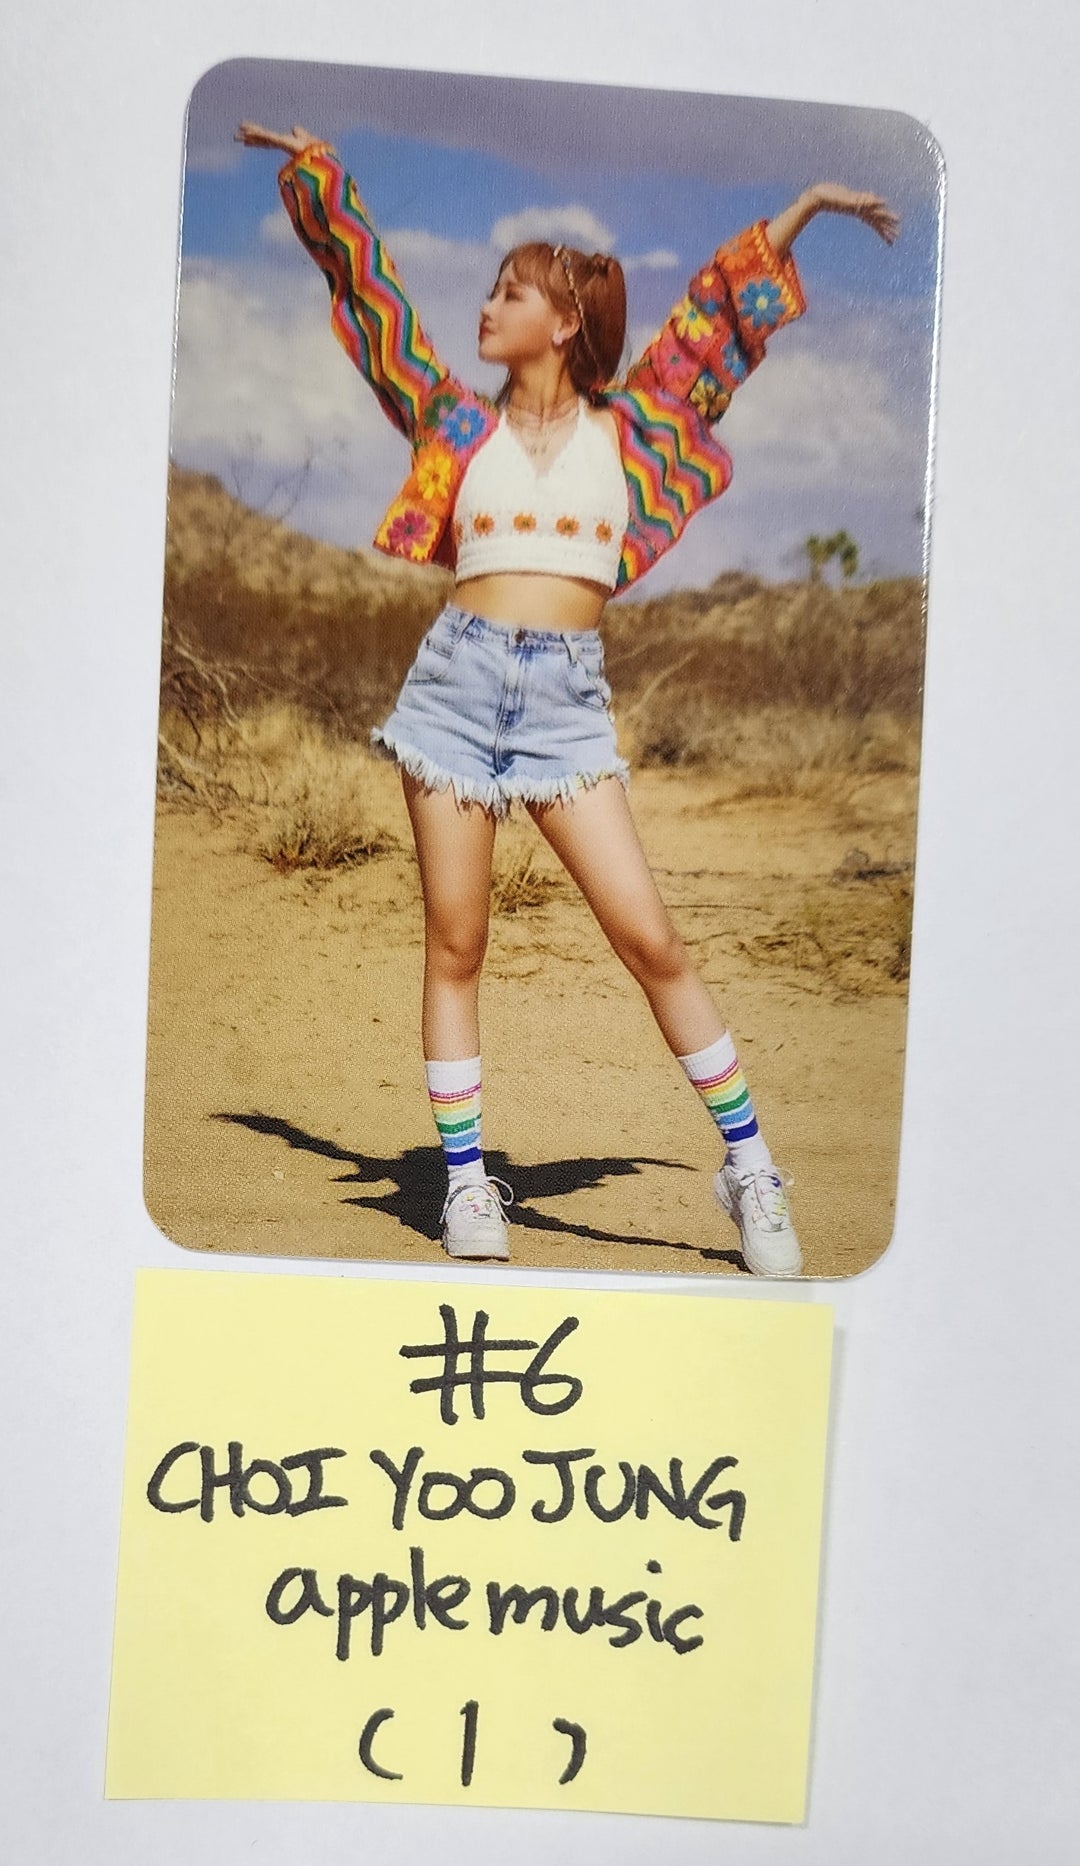 Choi Yoojung (of Weki Meki) - Apple Music Lucky Draw Event Photocard